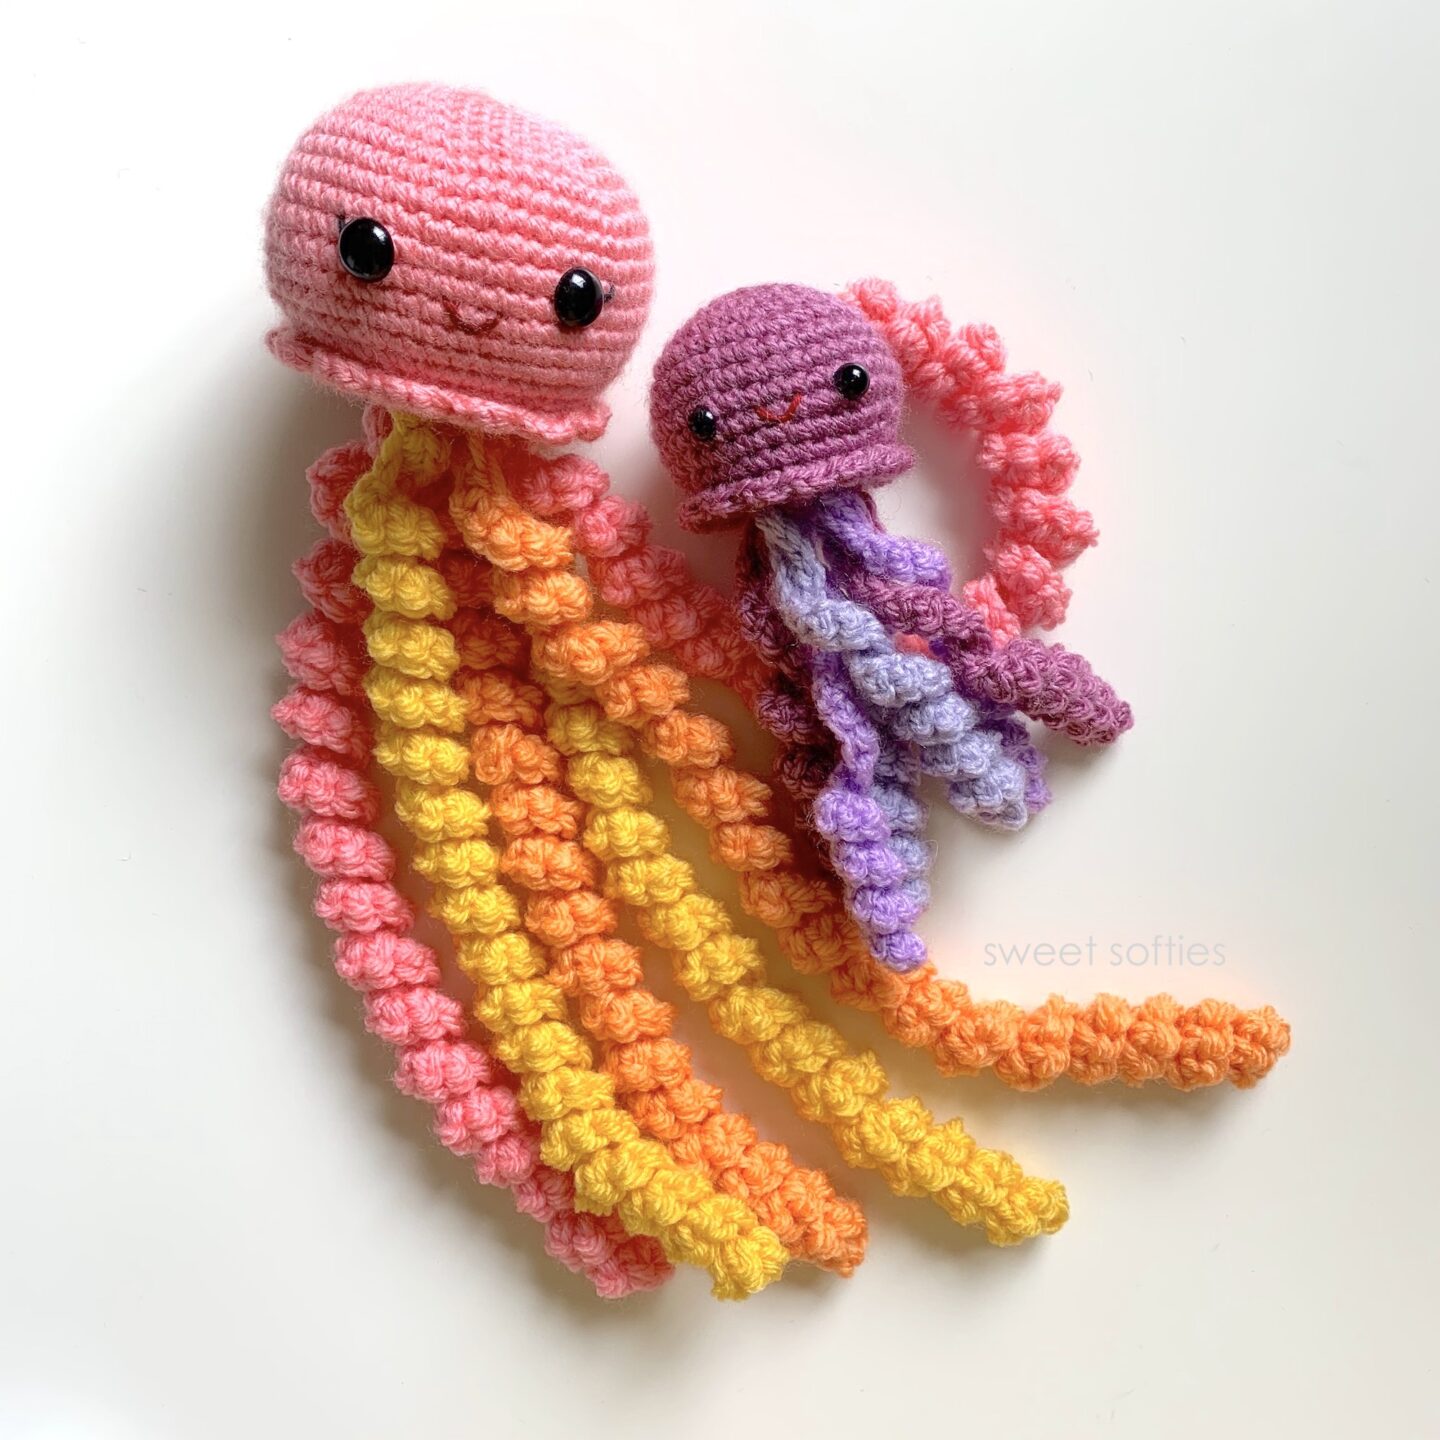 Crochet amigurumi patterns